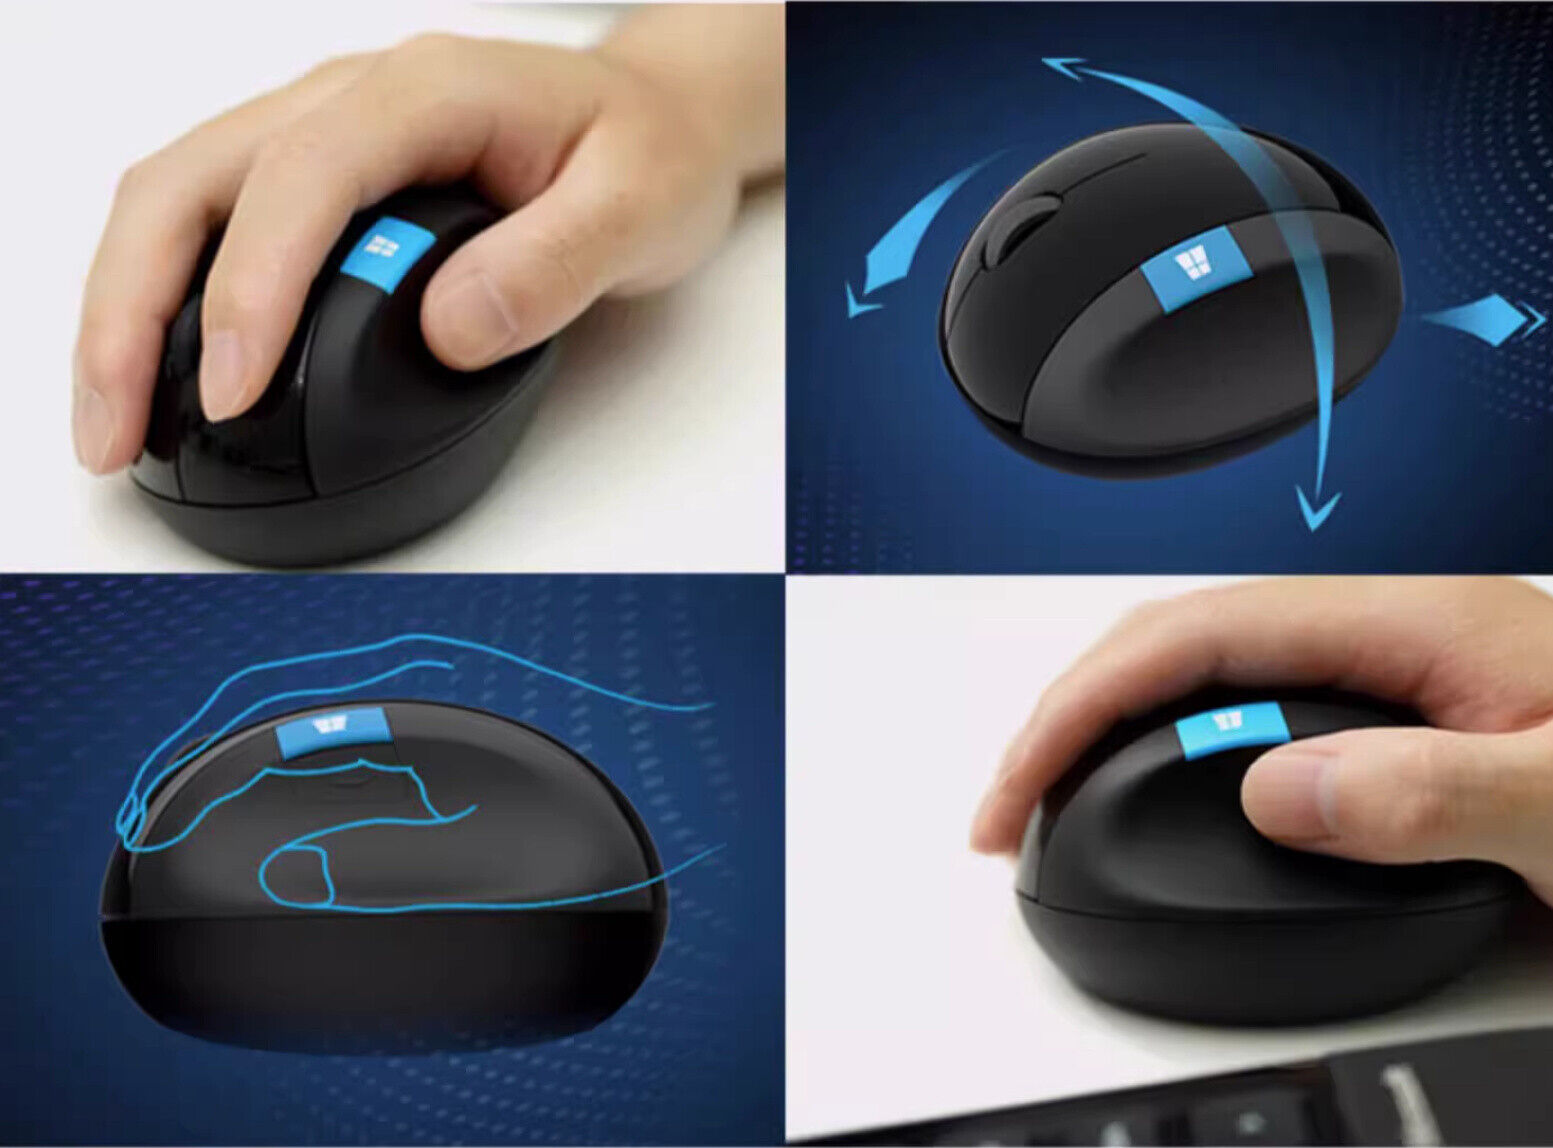 Microsoft Wireless Sculpt Ergonomic Mantou Mouse, Blue Shadow Comfort